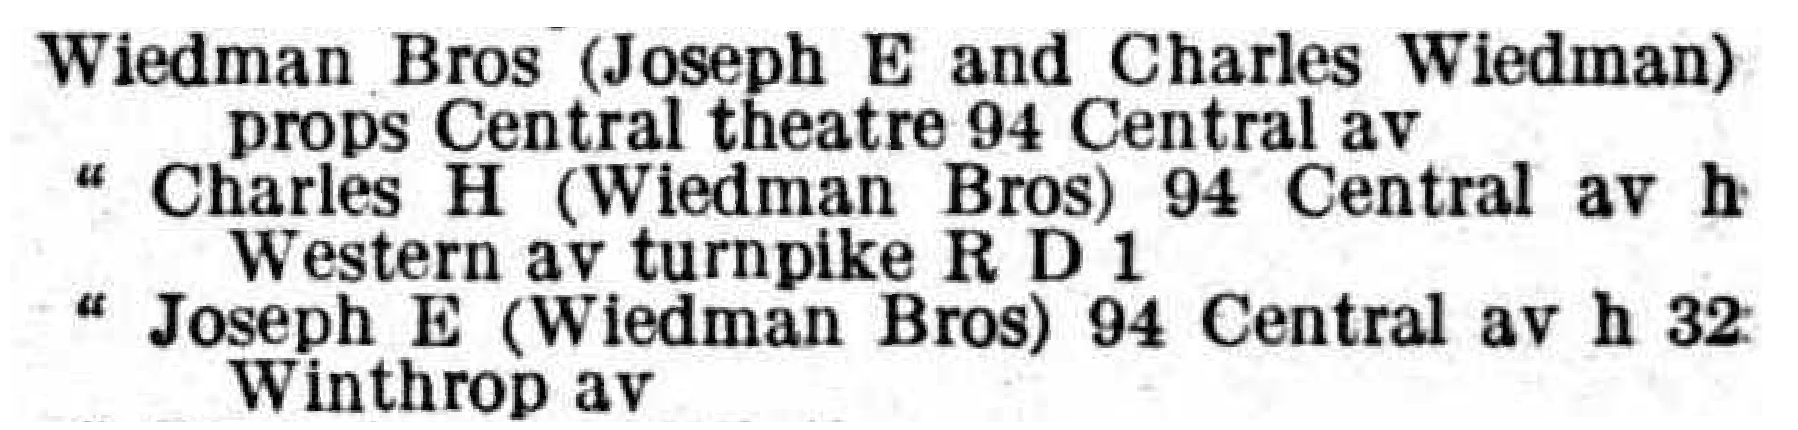 1924 CH Wiedman
      city directory listing